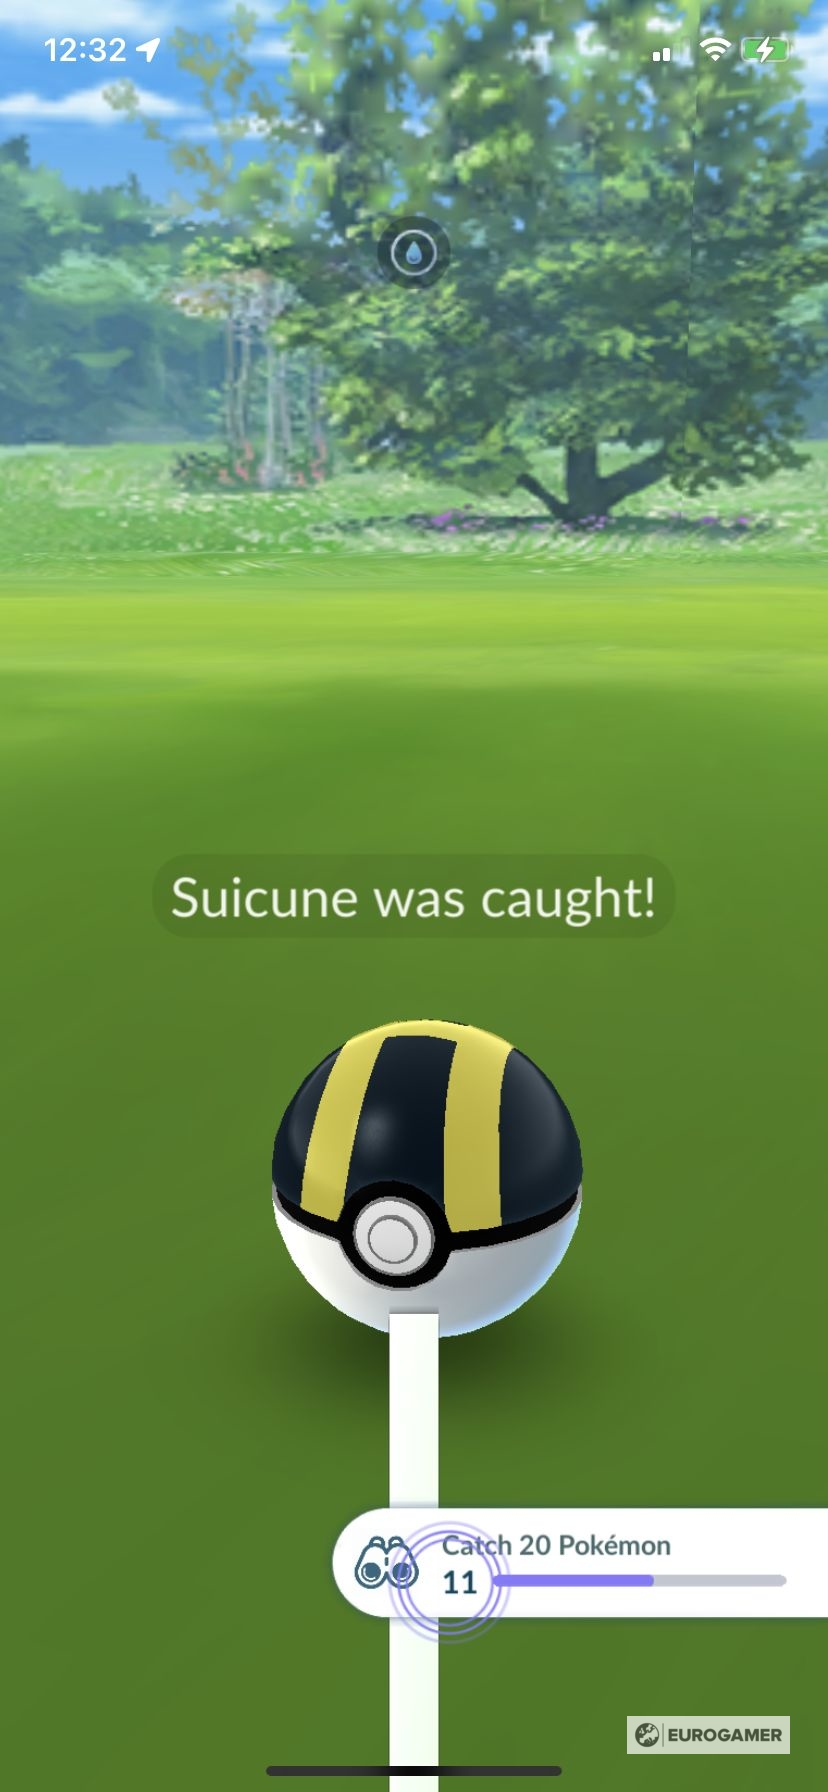 How to get Raikou Entei and Suicune in Photo Safari in Pokémon Go